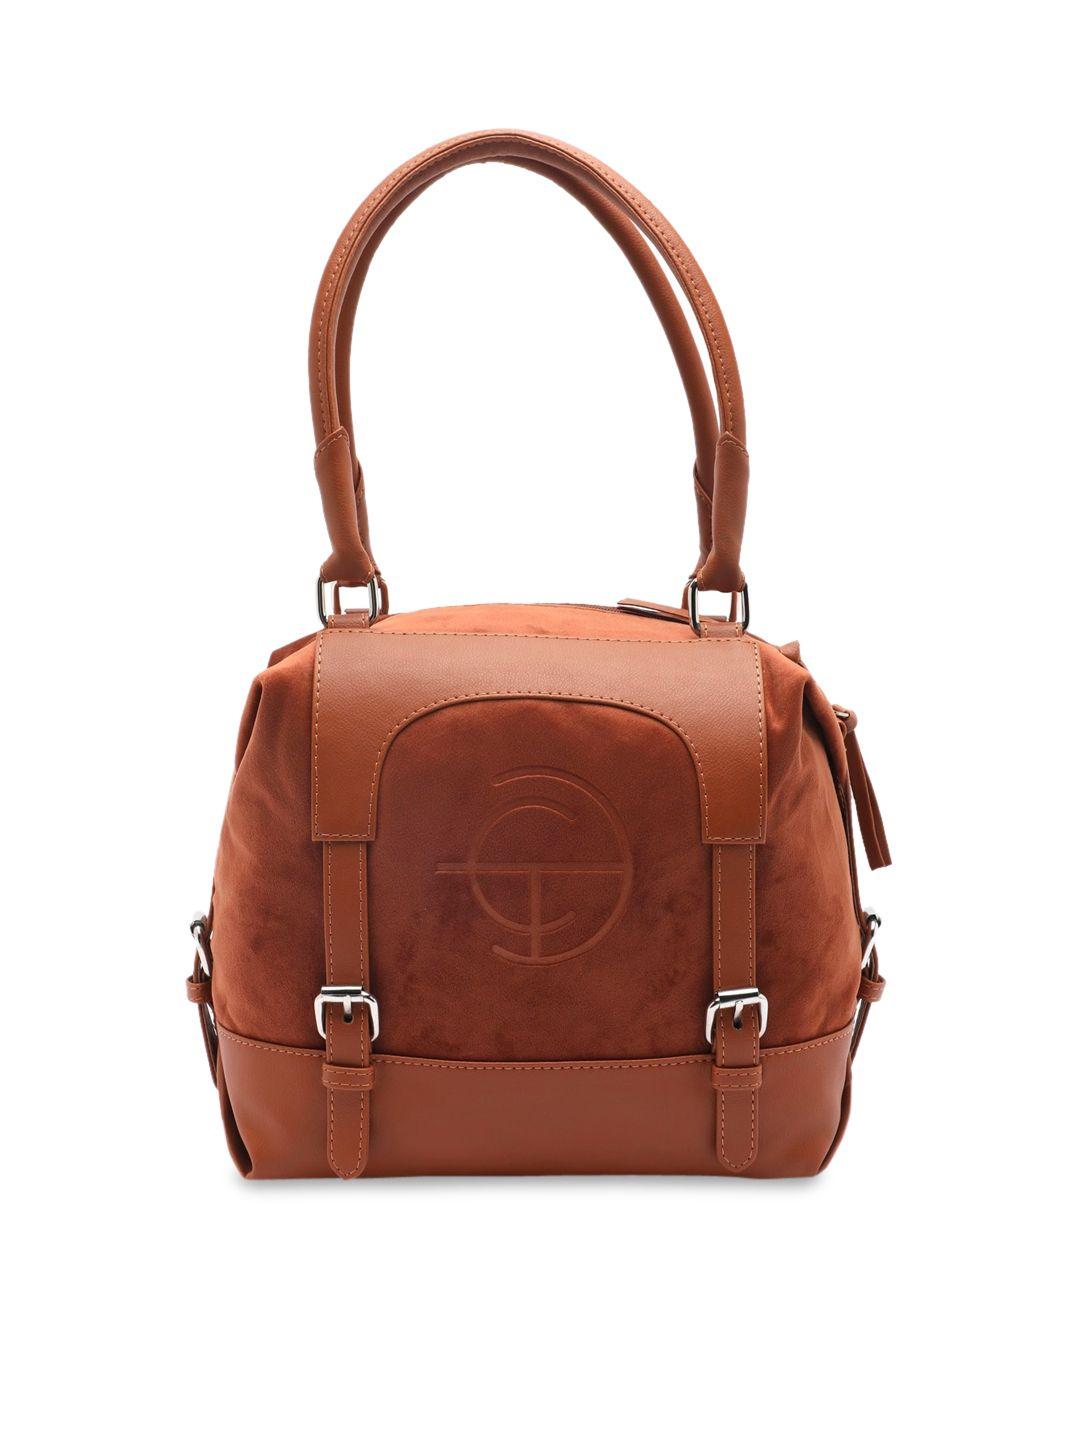 clotche-the-classic-brownish-orange-satchel-bag